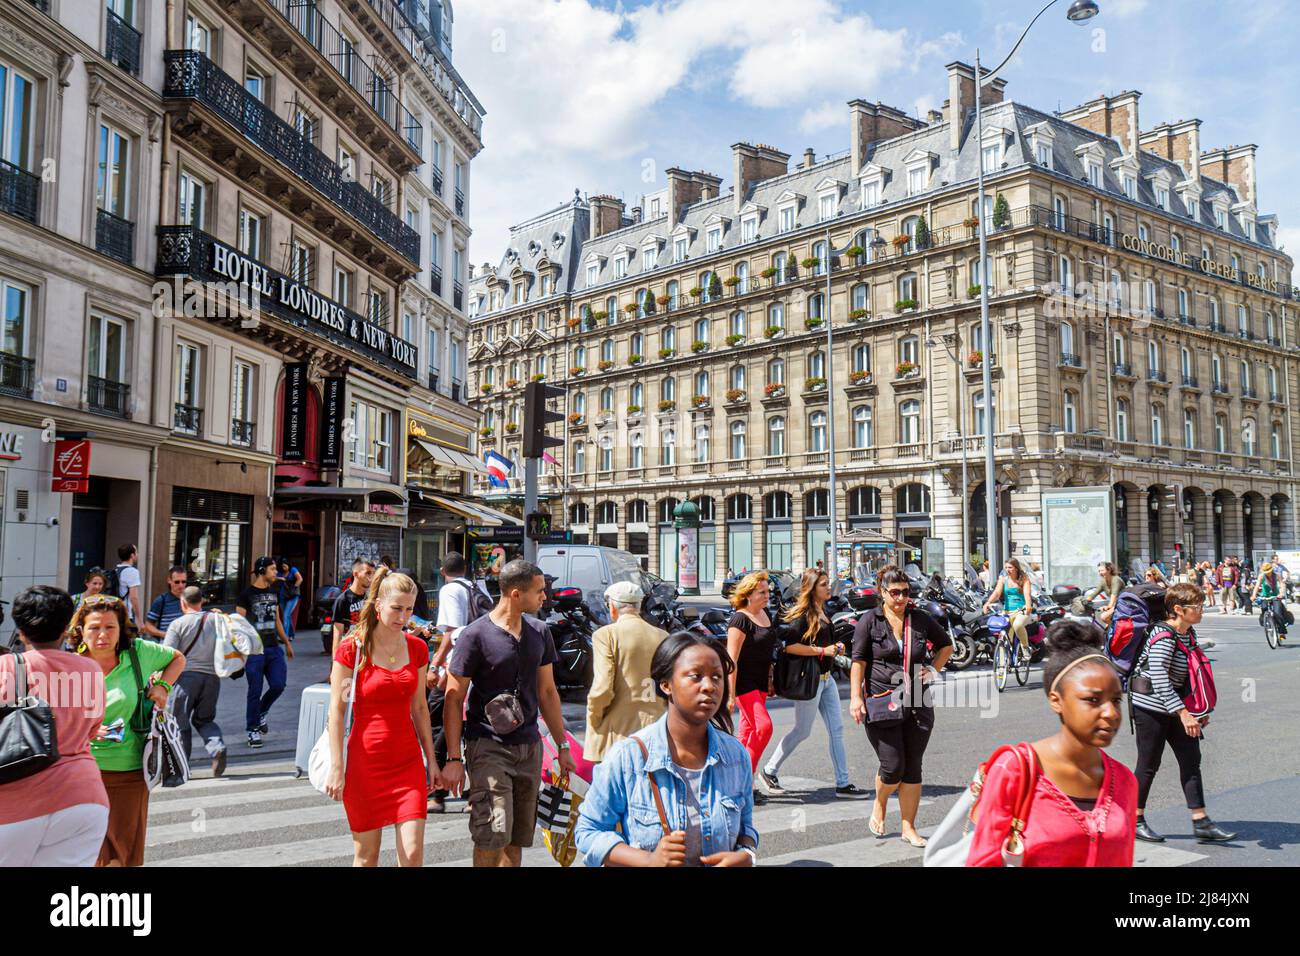 Paris France,Europe,French,Place du Havre,Black men women pedestrians,Hotel Londres & New York,Haussmann residential apartments flats buildings Stock Photo